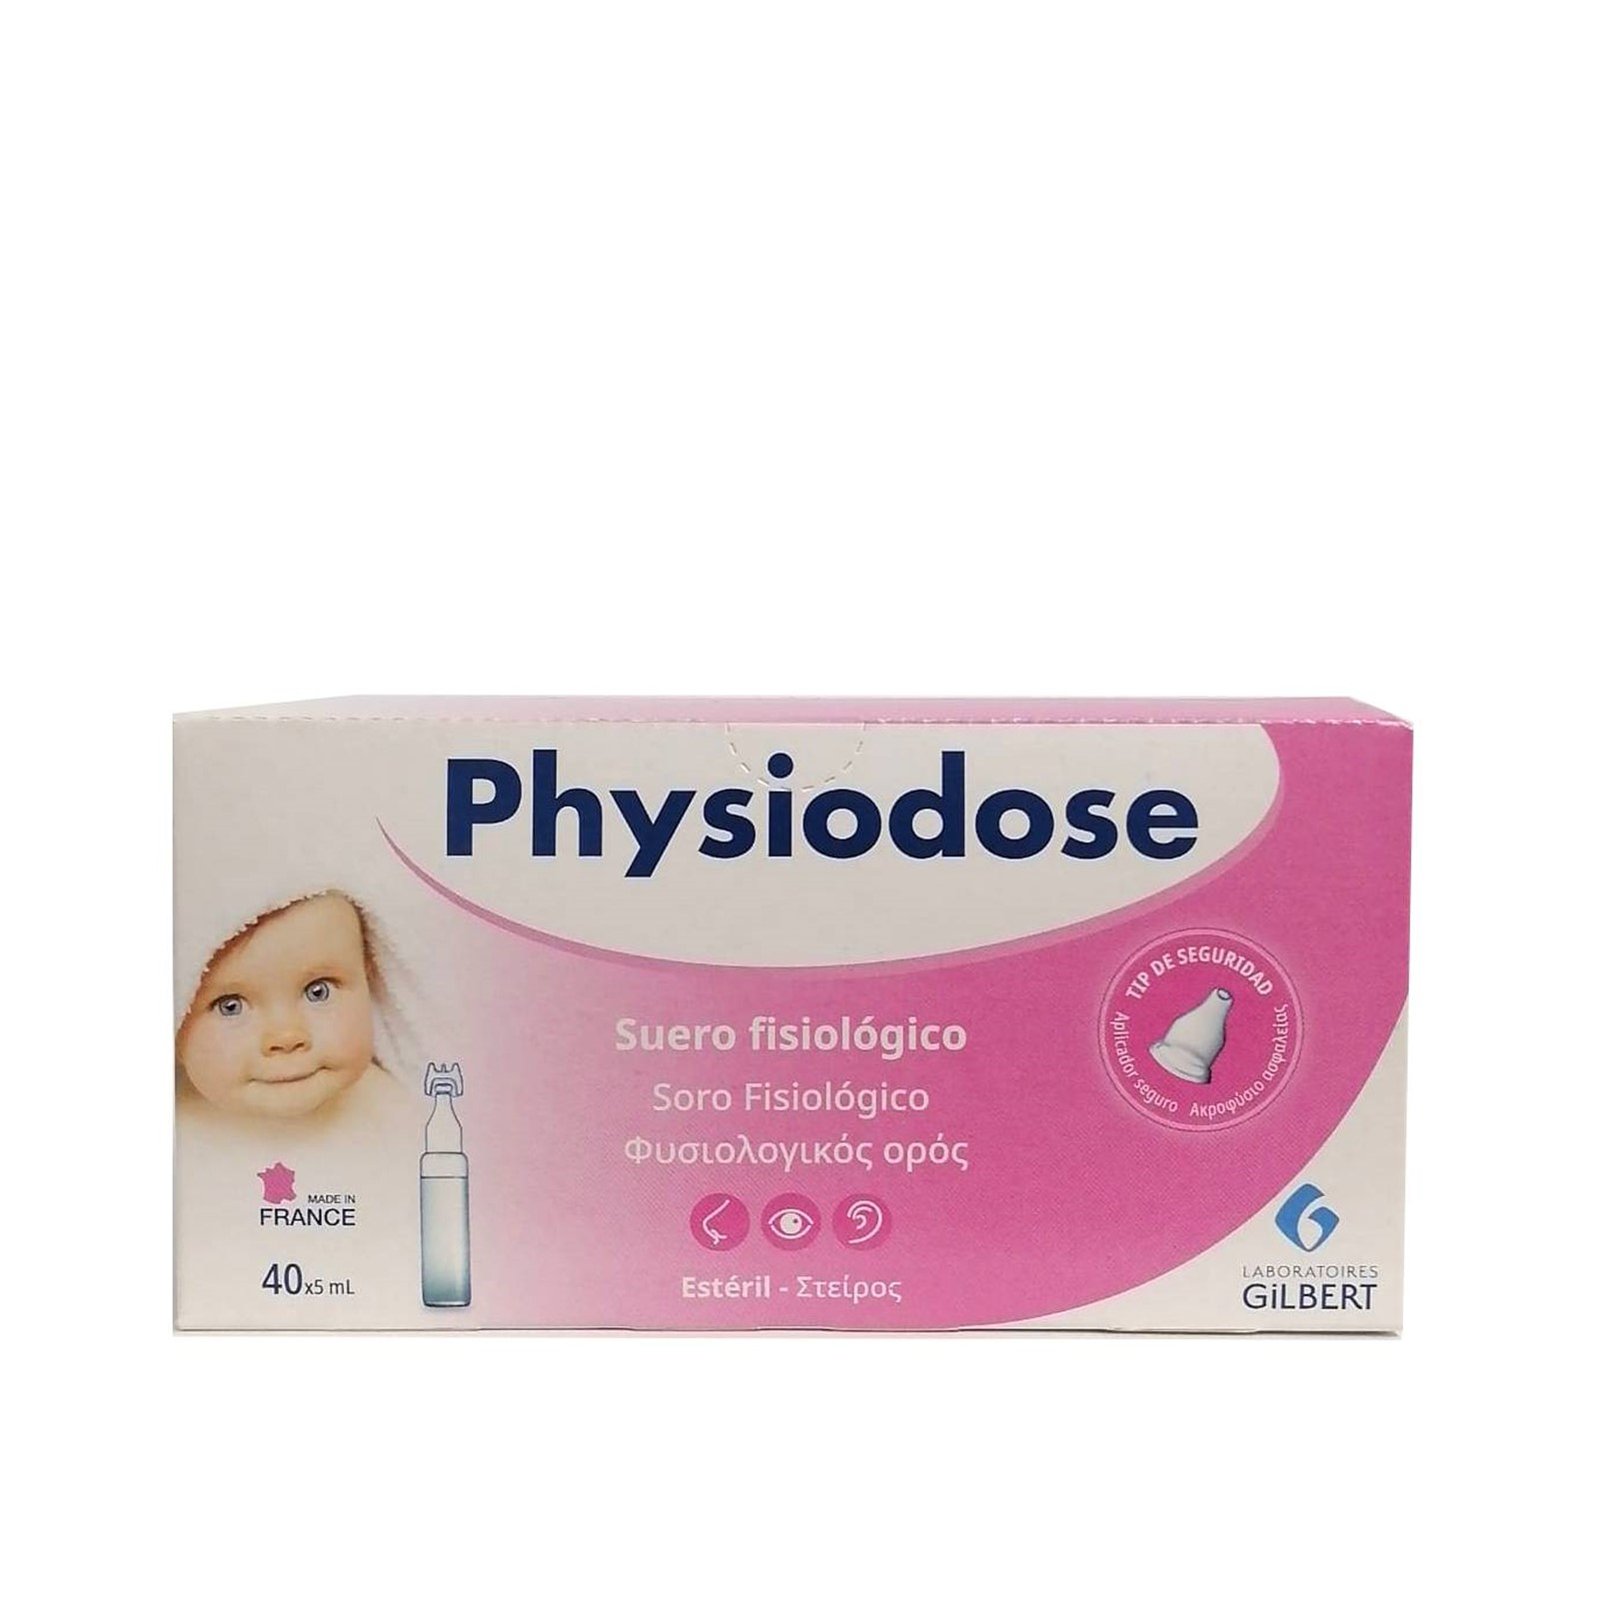 Physiodose Physiological Saline Solution 40x5ml